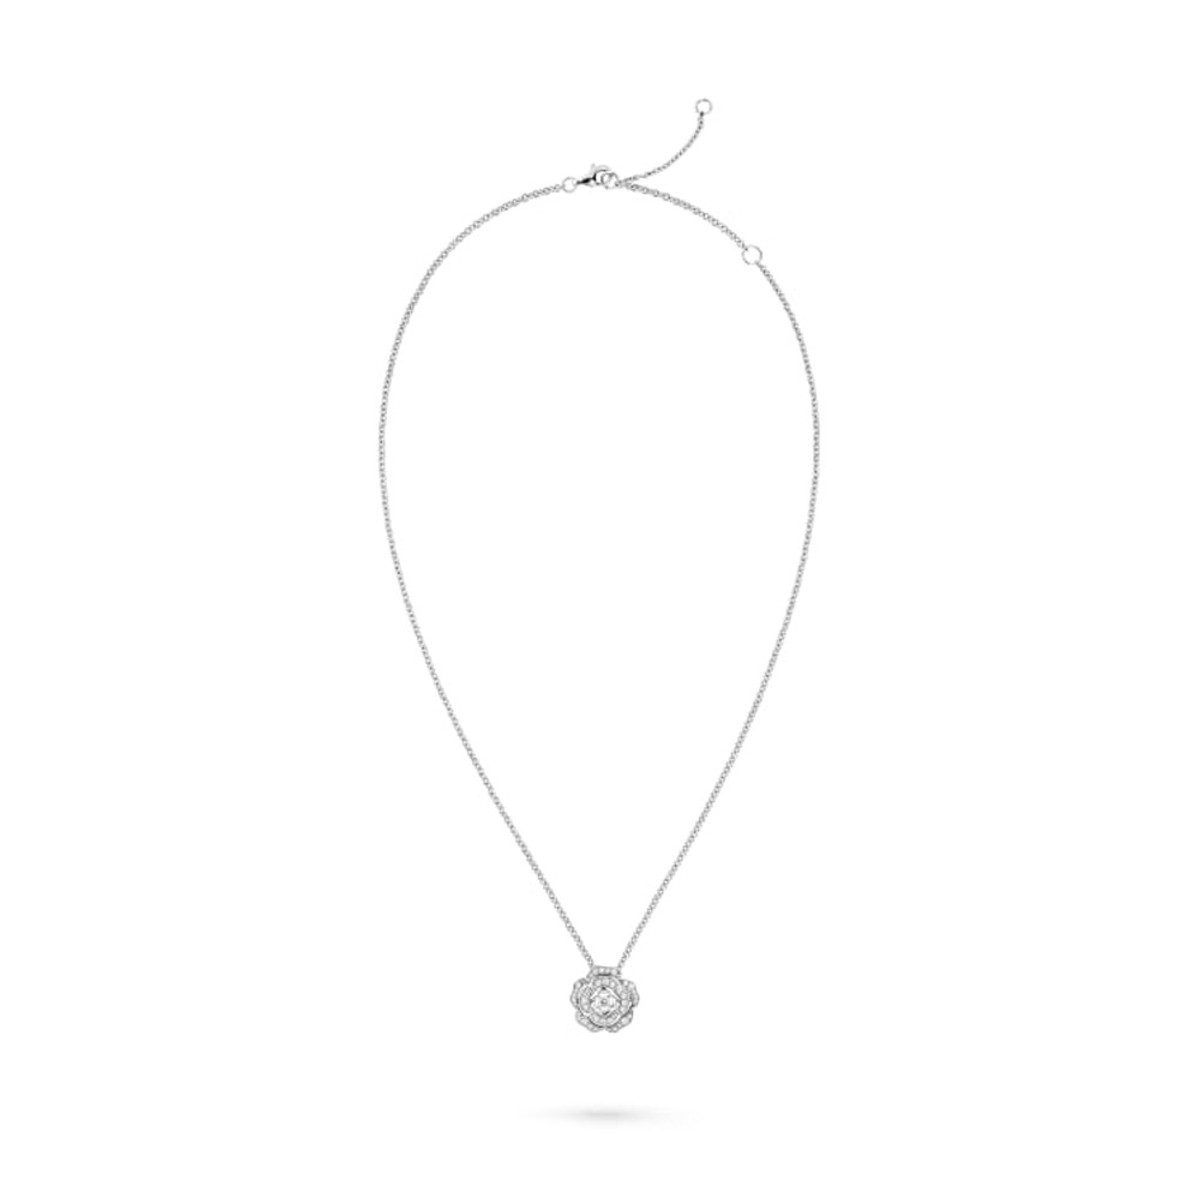 Chanel 18K White Gold Bouton de Camelia Diamond Necklace Product Image